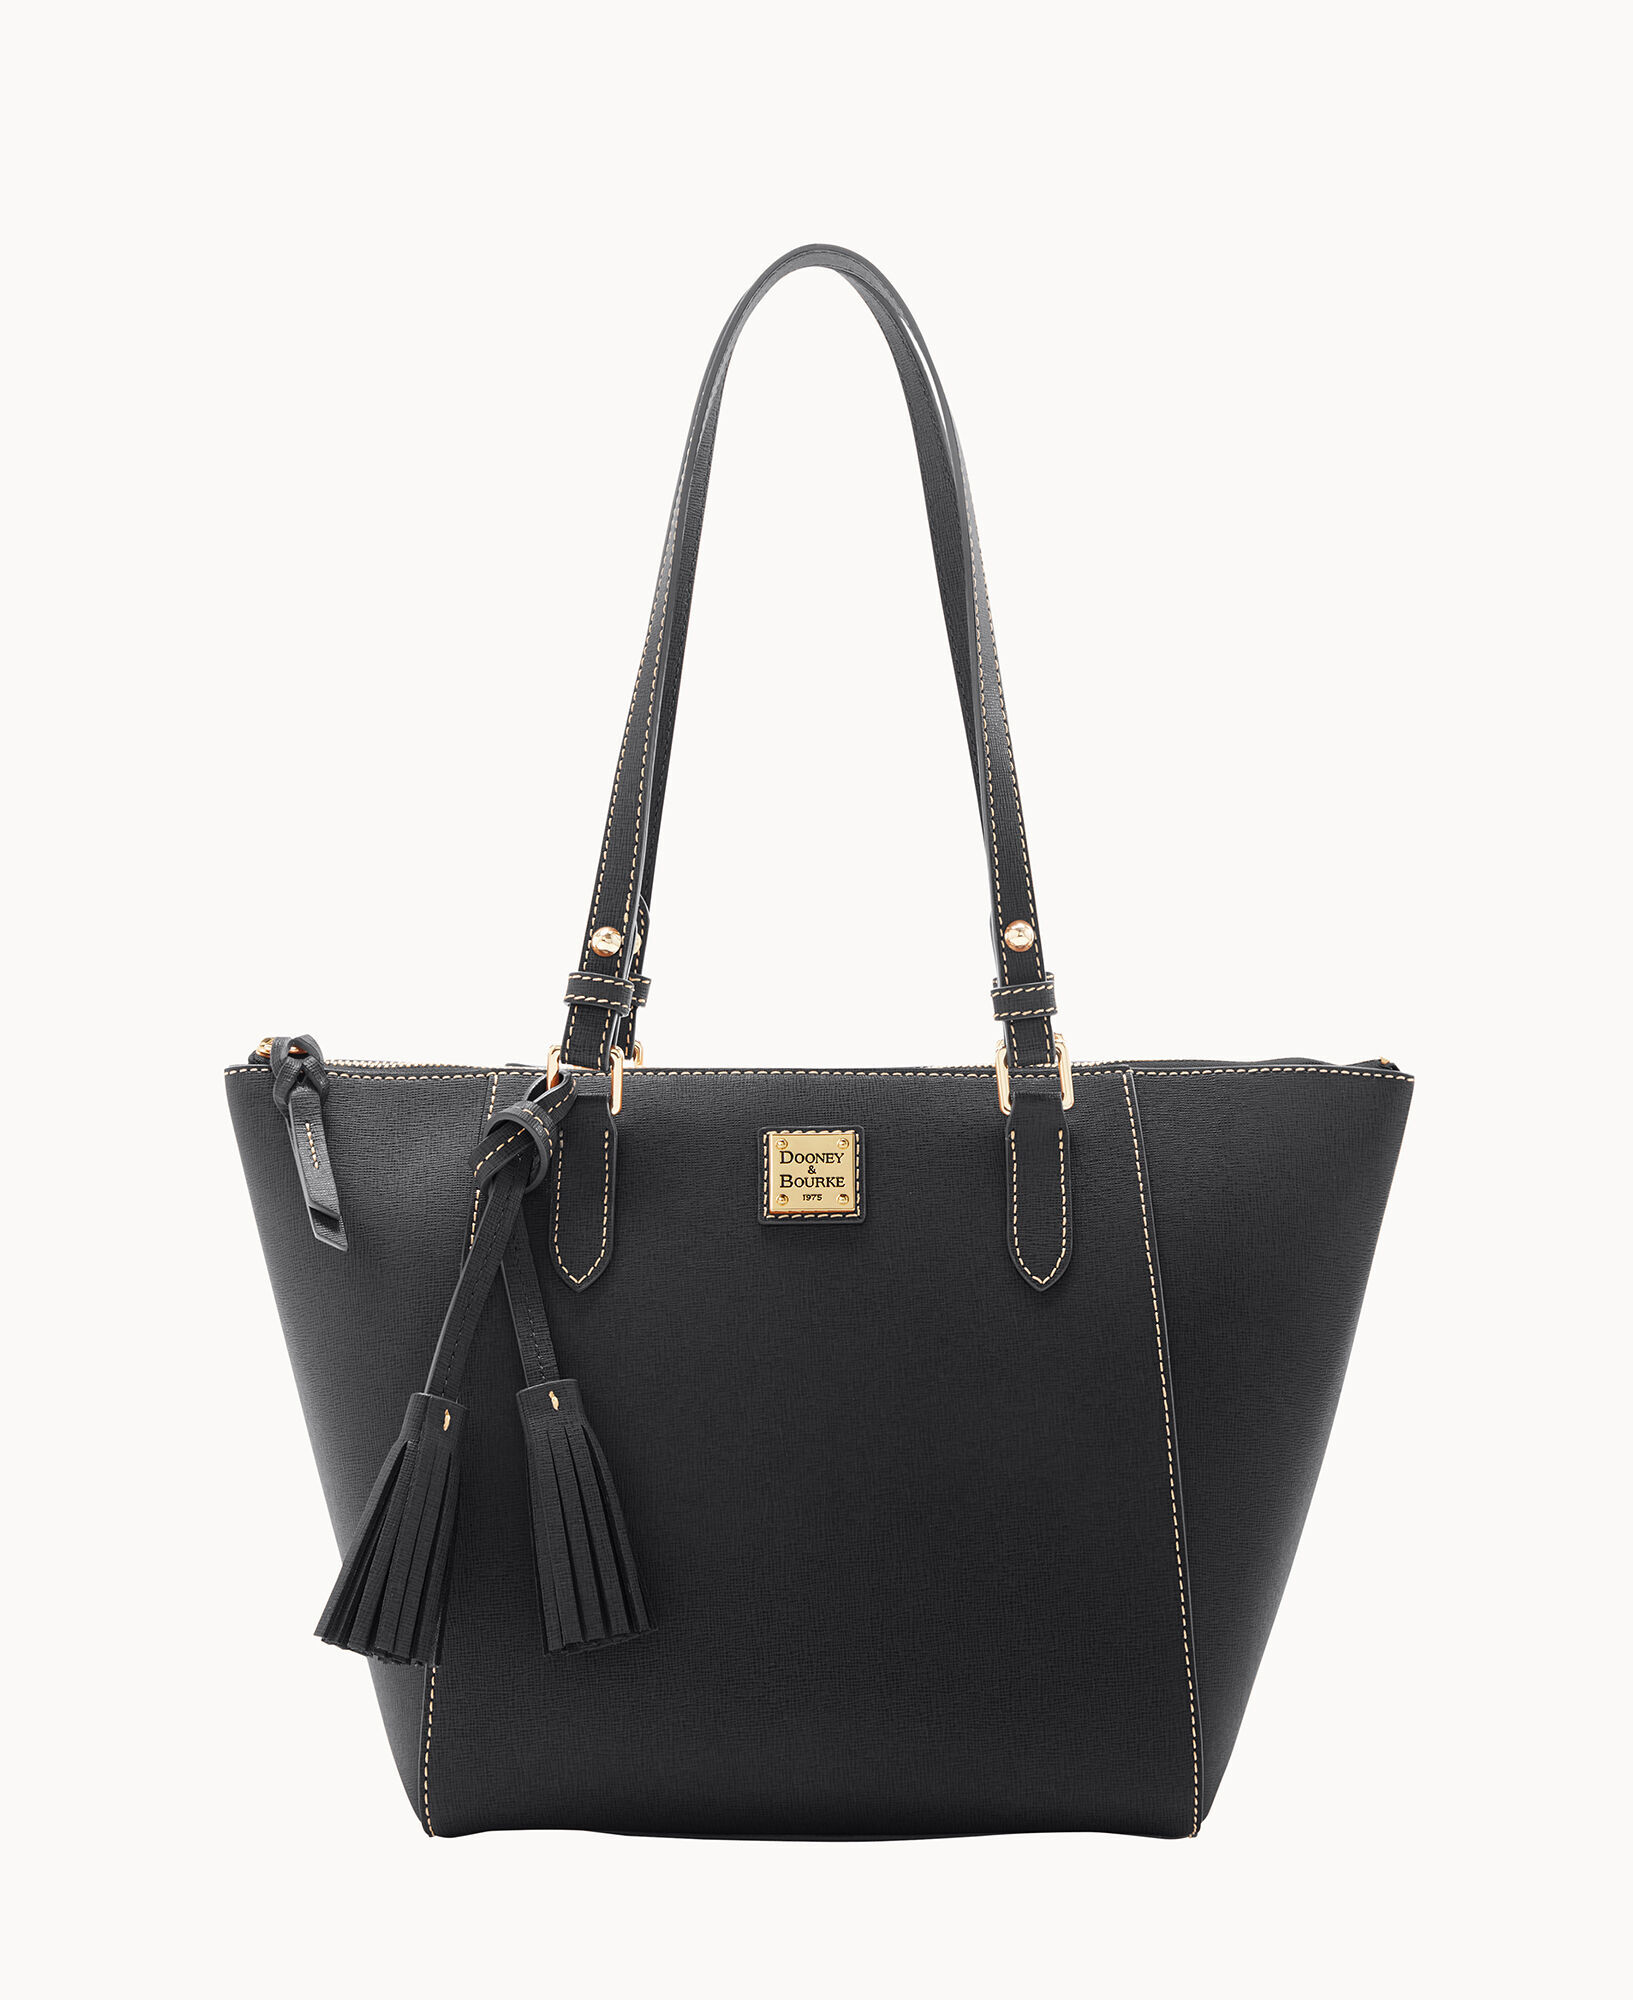 Dooney & Bourke Black Crossbody Bag One Size - 67% off